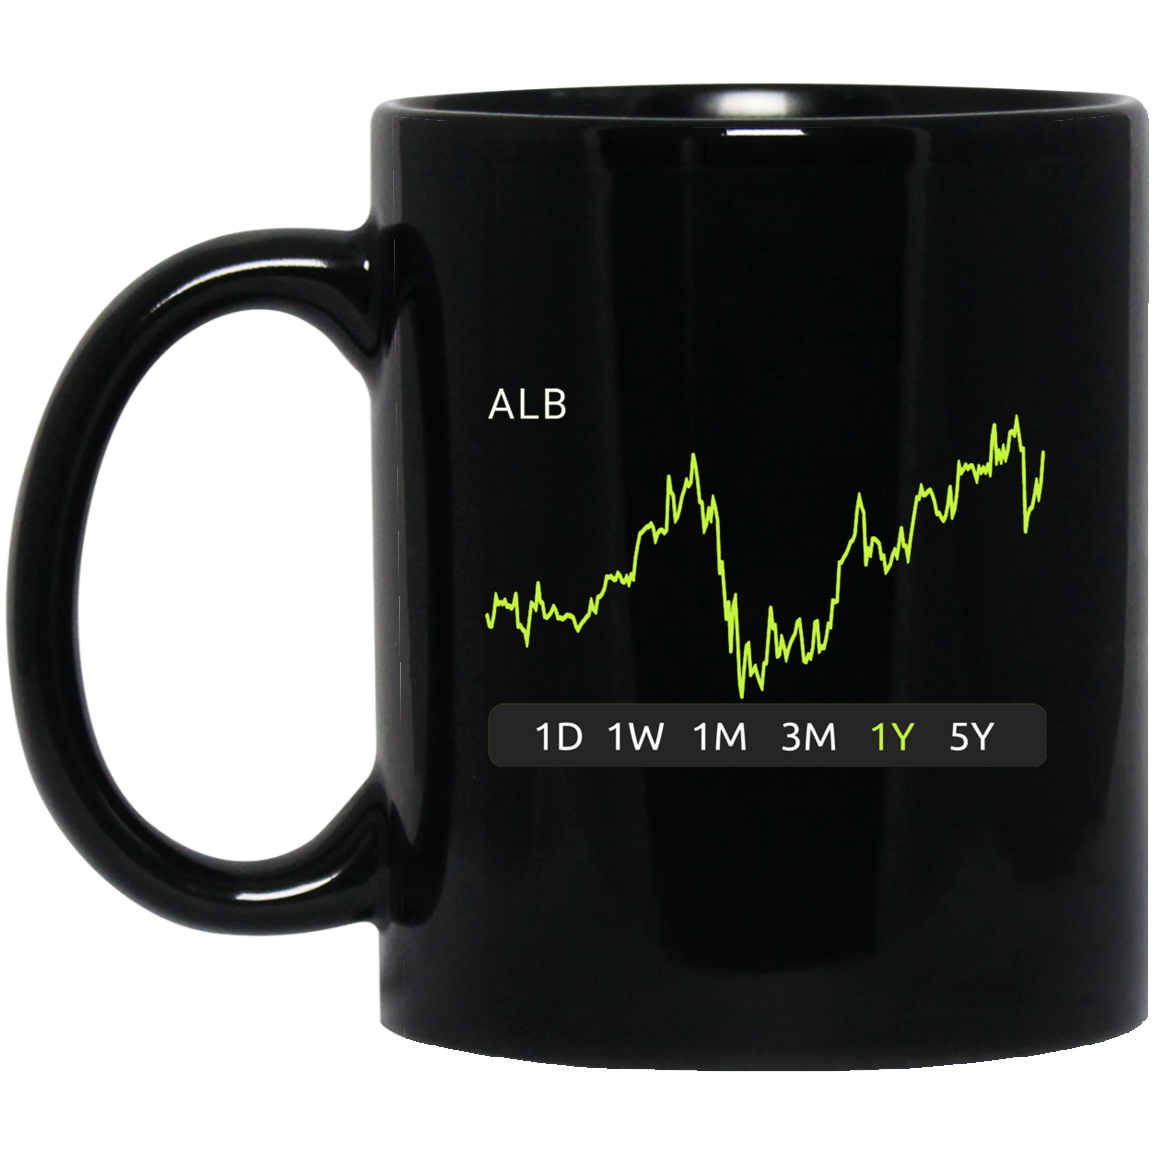 ALB Stock 1y Mug